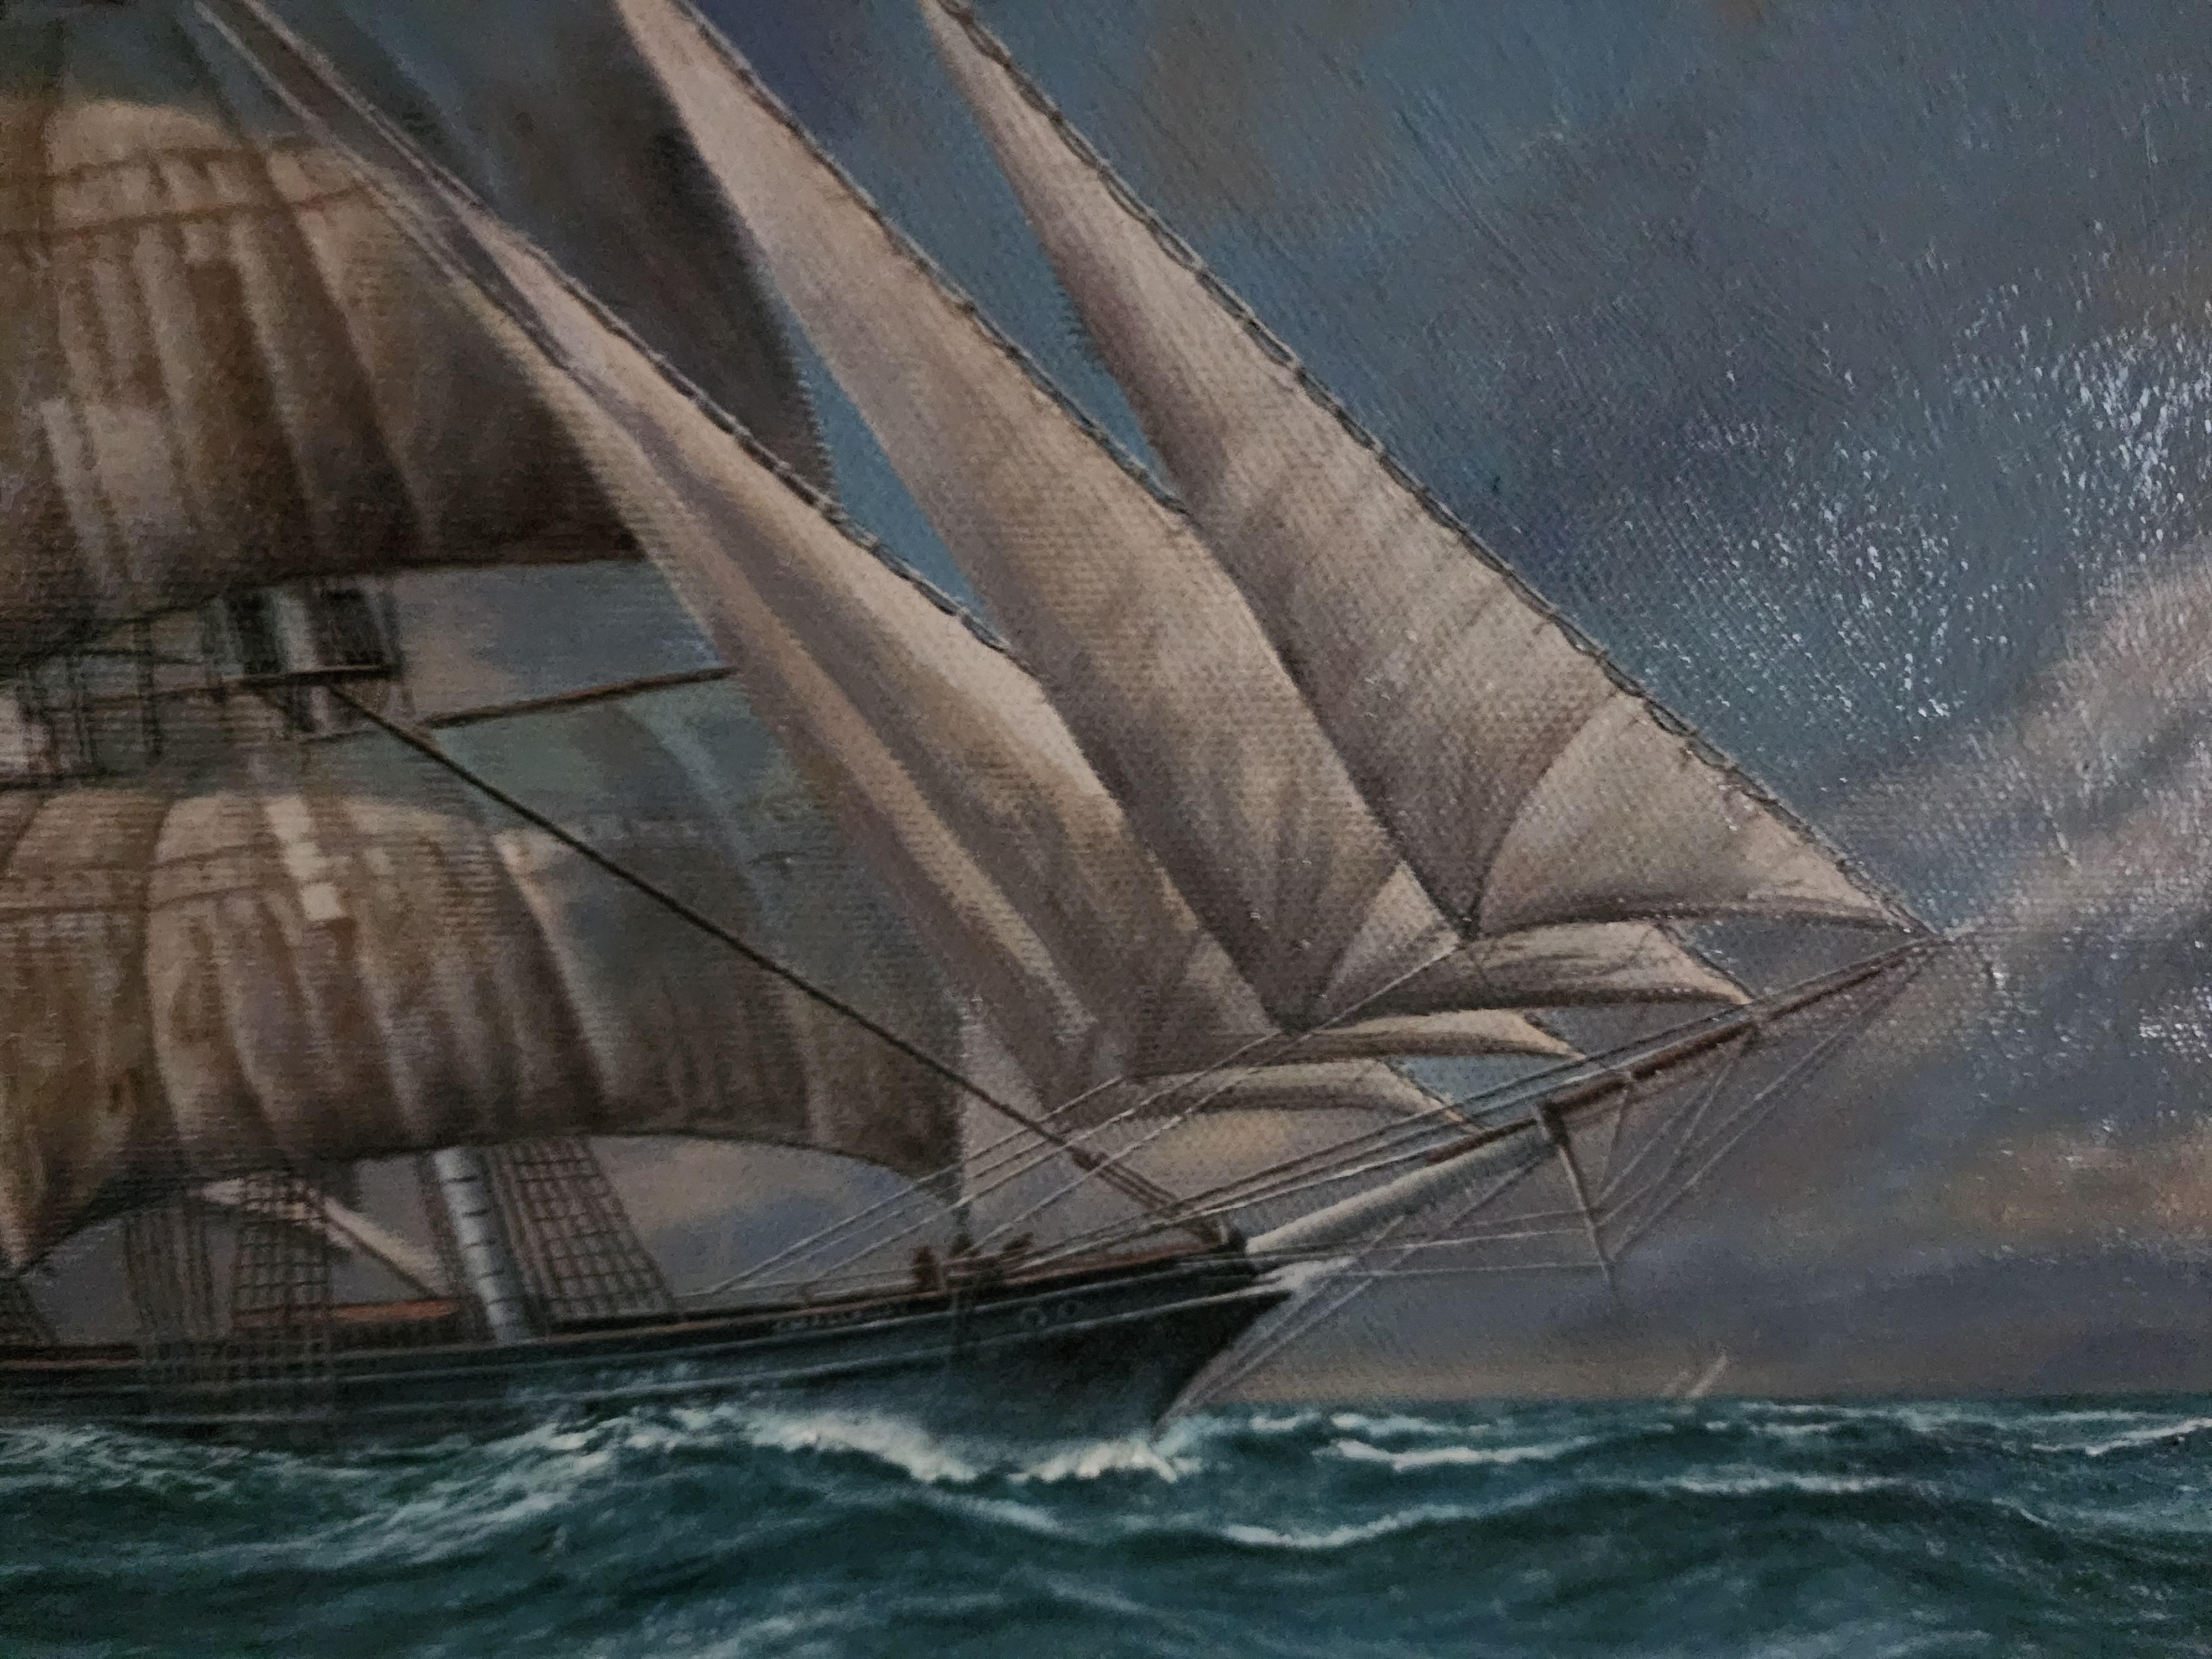 Clipper ship by tge British artist Muchael Beddows.